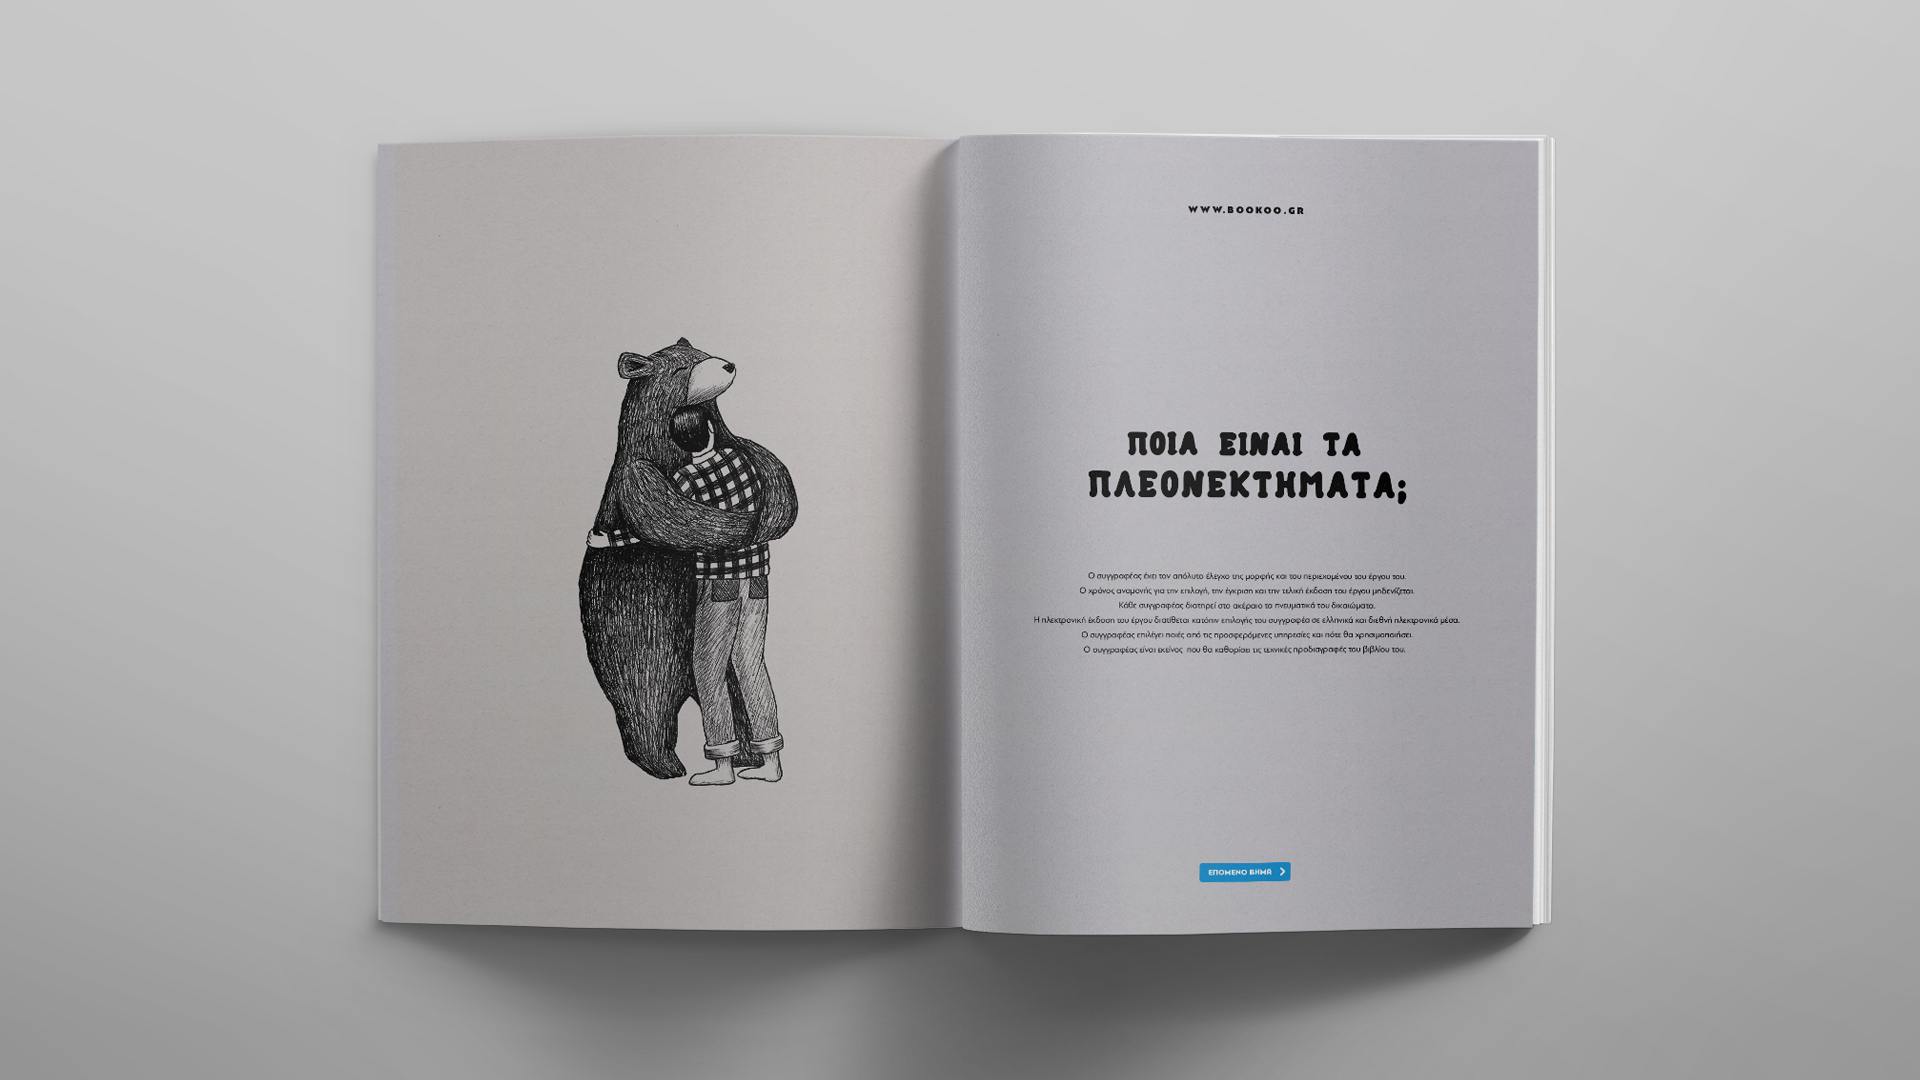 designpark_bookoo_press_kit_book_design